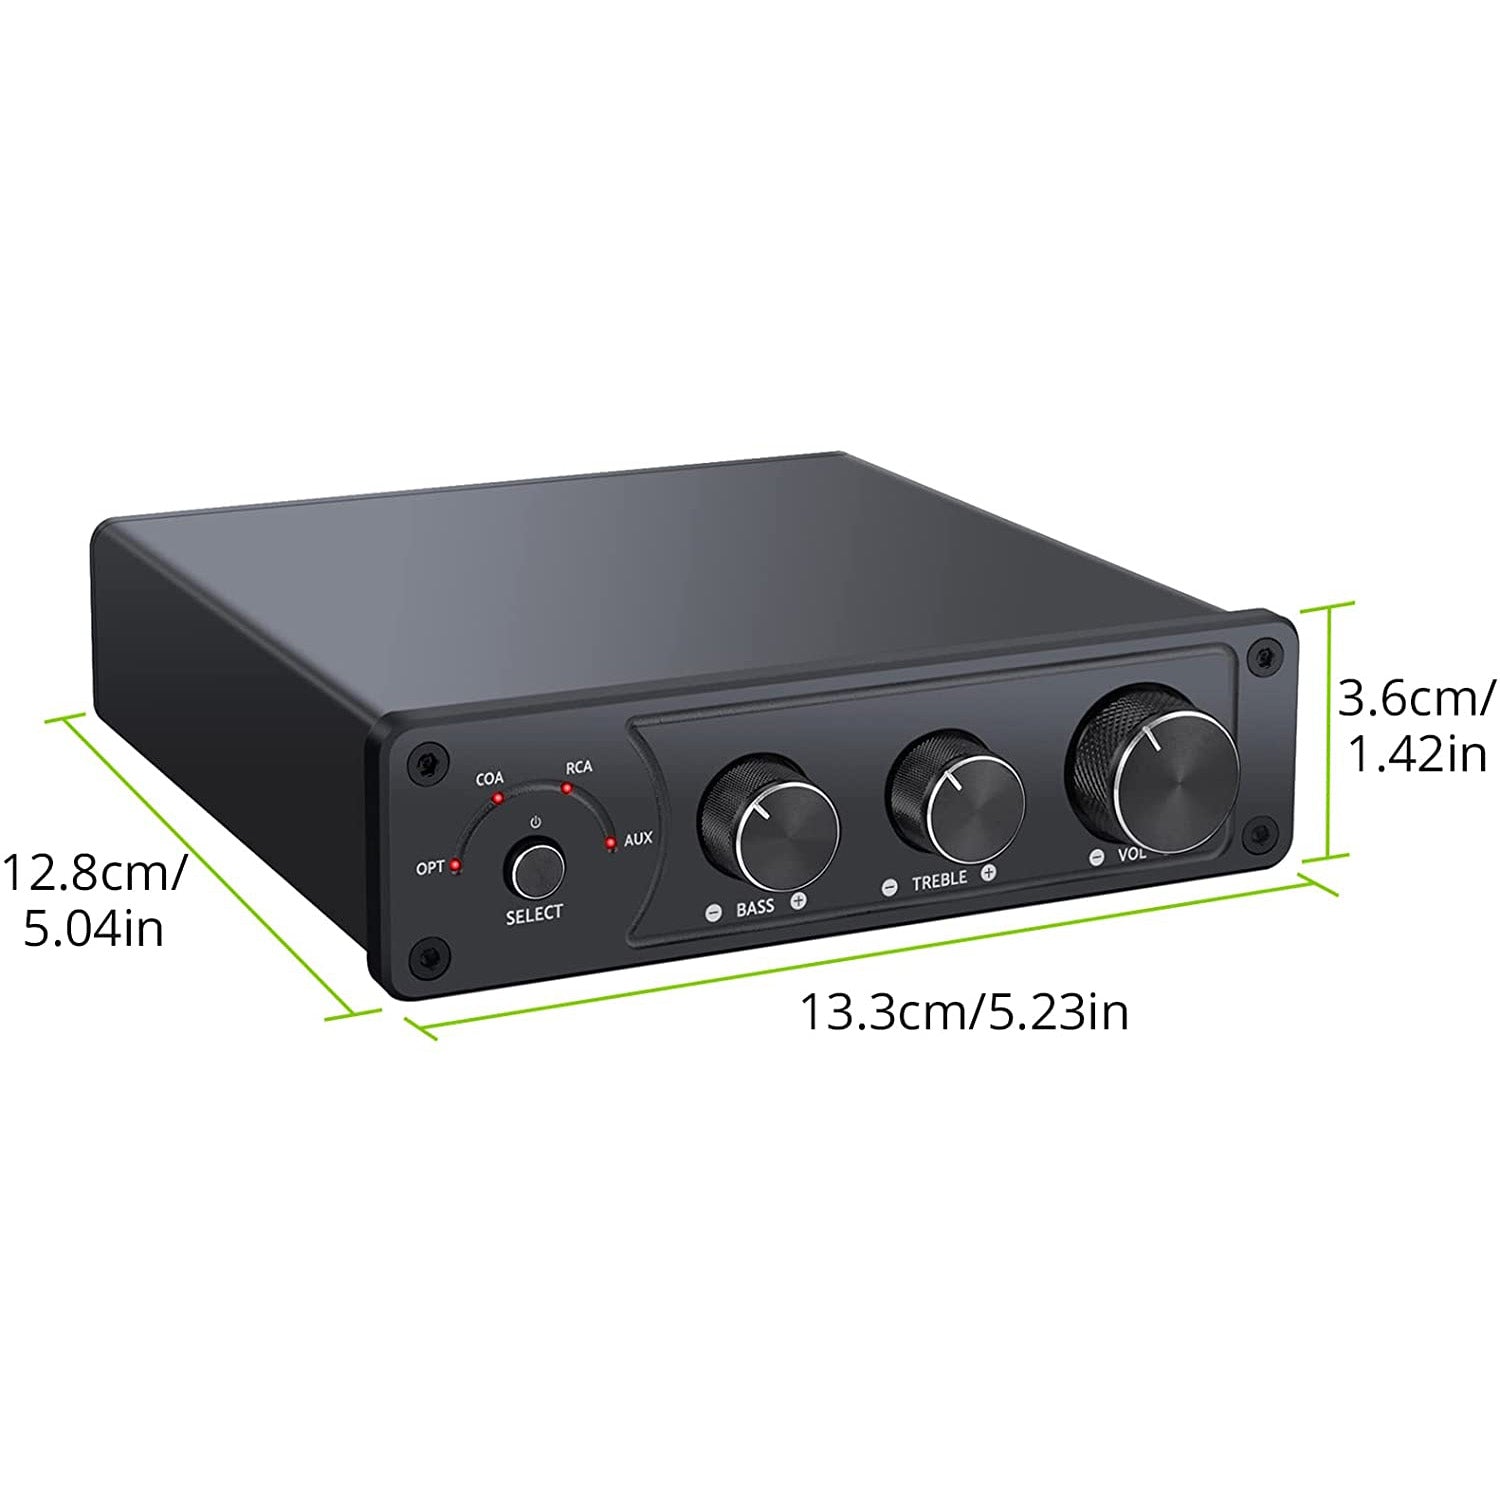 LiNKFOR Hi-Fi Stereo Audio Amplifier + DAC